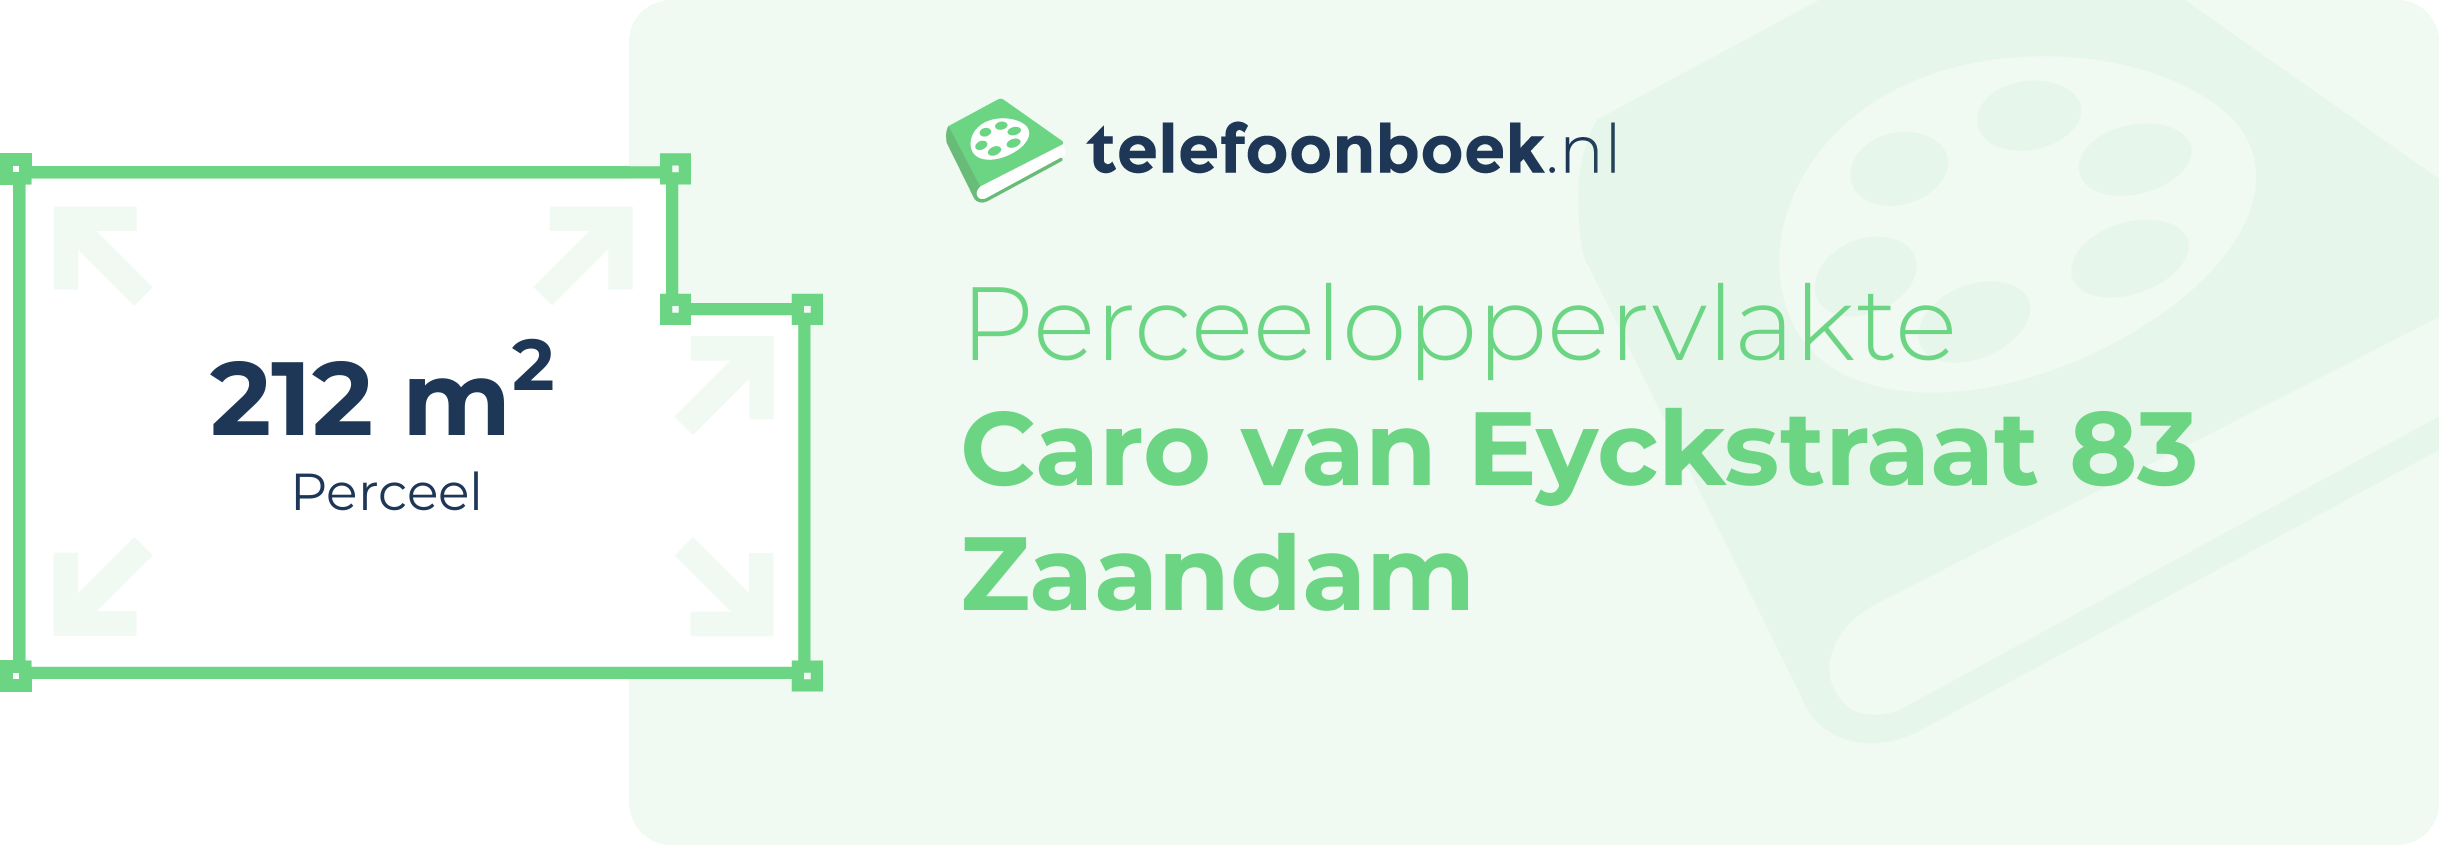 Perceeloppervlakte Caro Van Eyckstraat 83 Zaandam